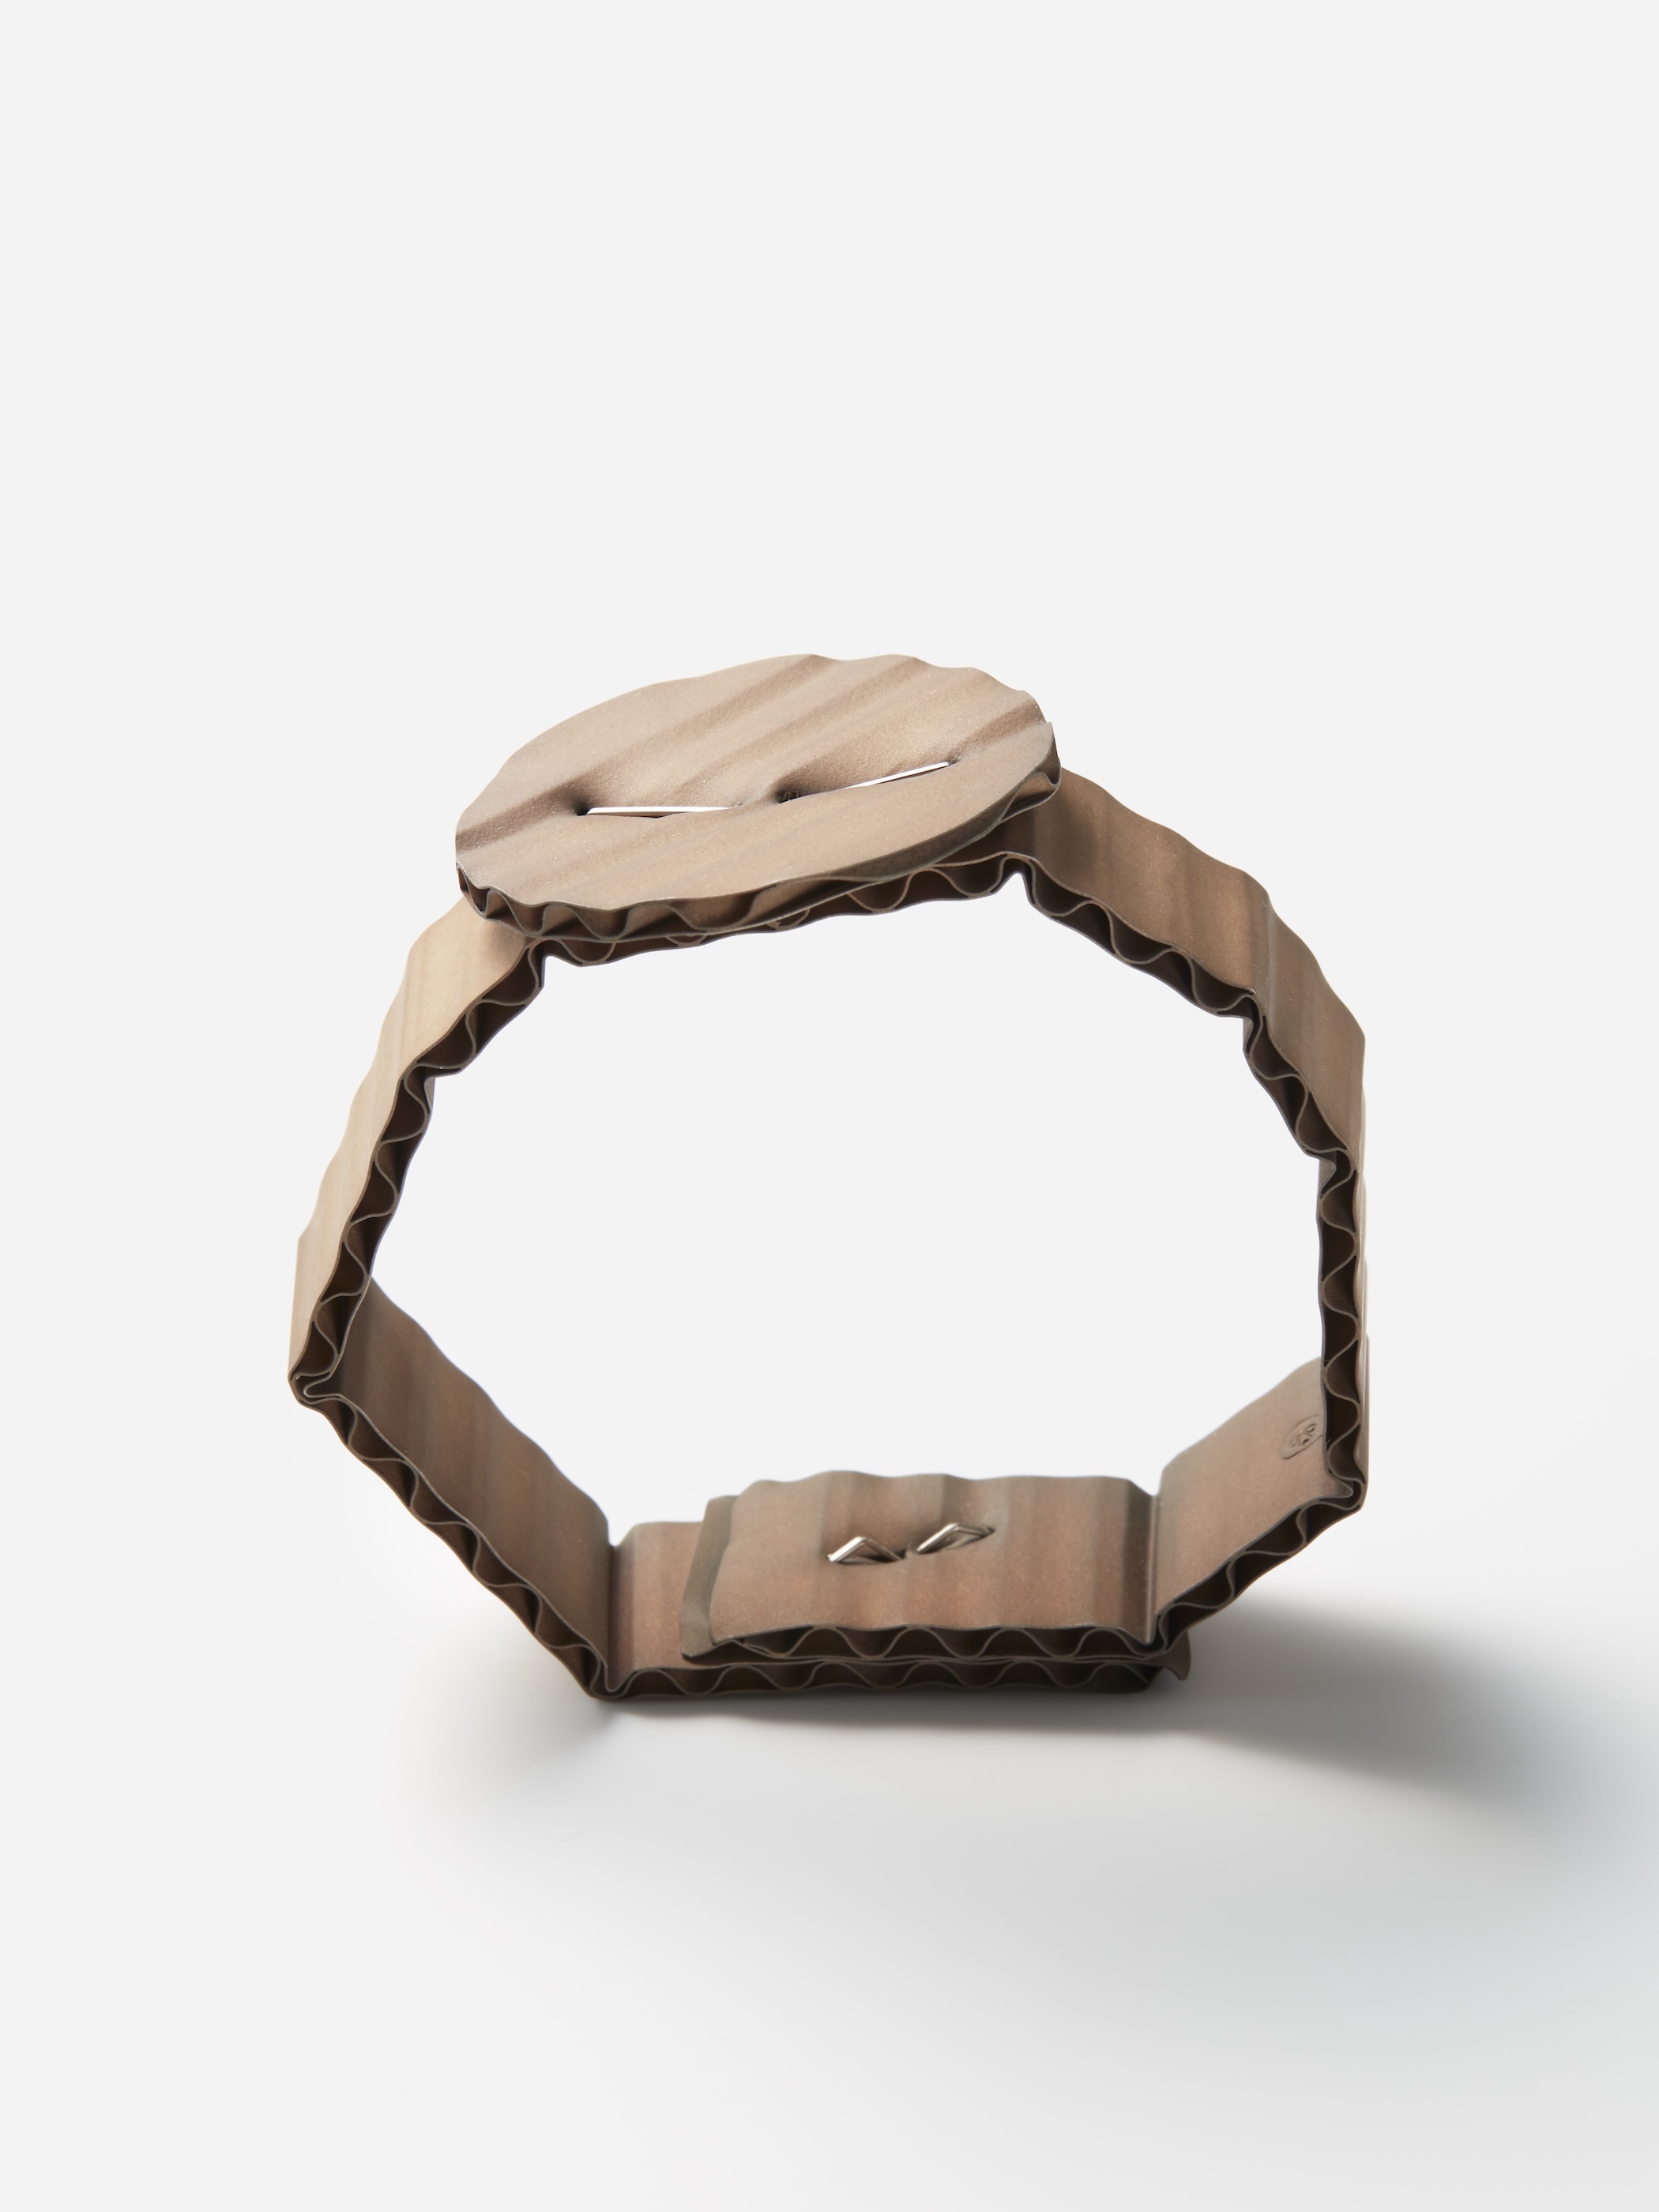 David Bielander / Cardboard bracelet watch